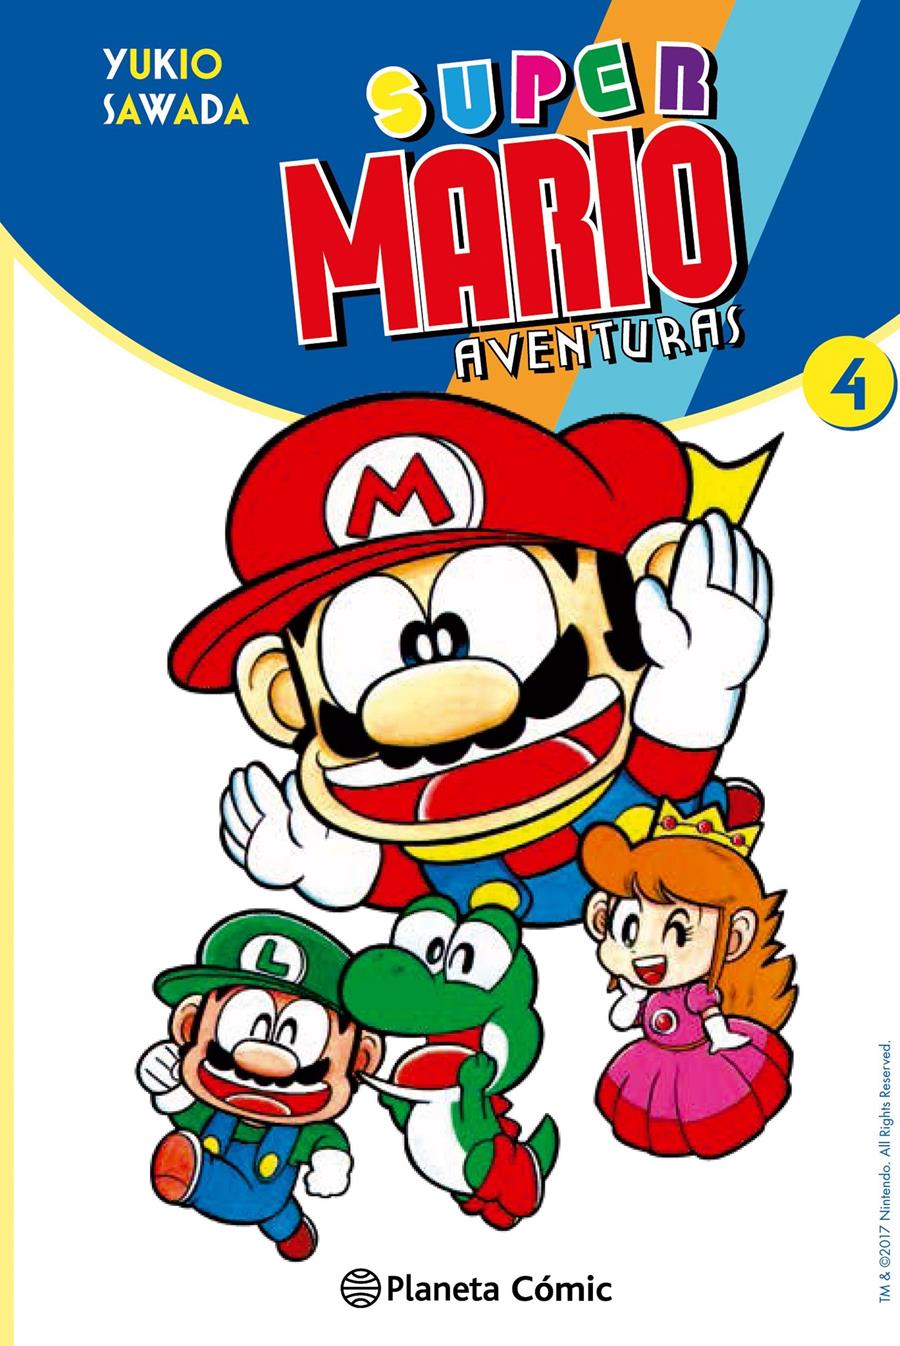 Super Mario nº 04 | N0417-PLAN19 | Yukio Sawada | Terra de Còmic - Tu tienda de cómics online especializada en cómics, manga y merchandising